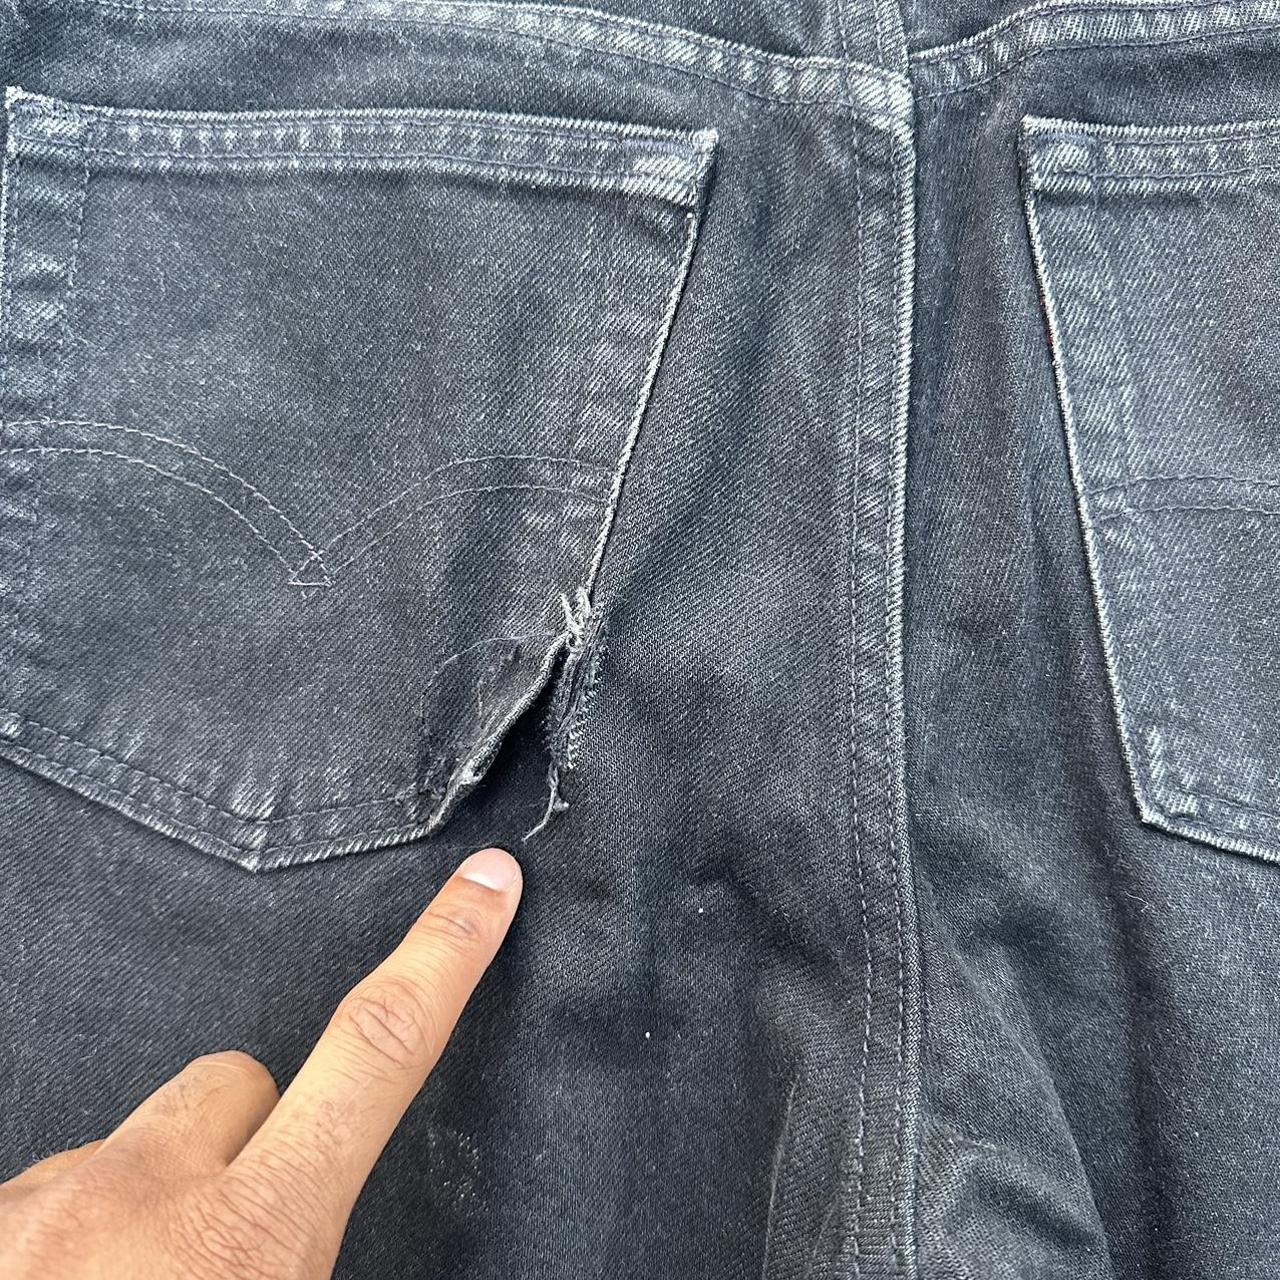 Black denim jeans Exact measurements waist 16’... - Depop